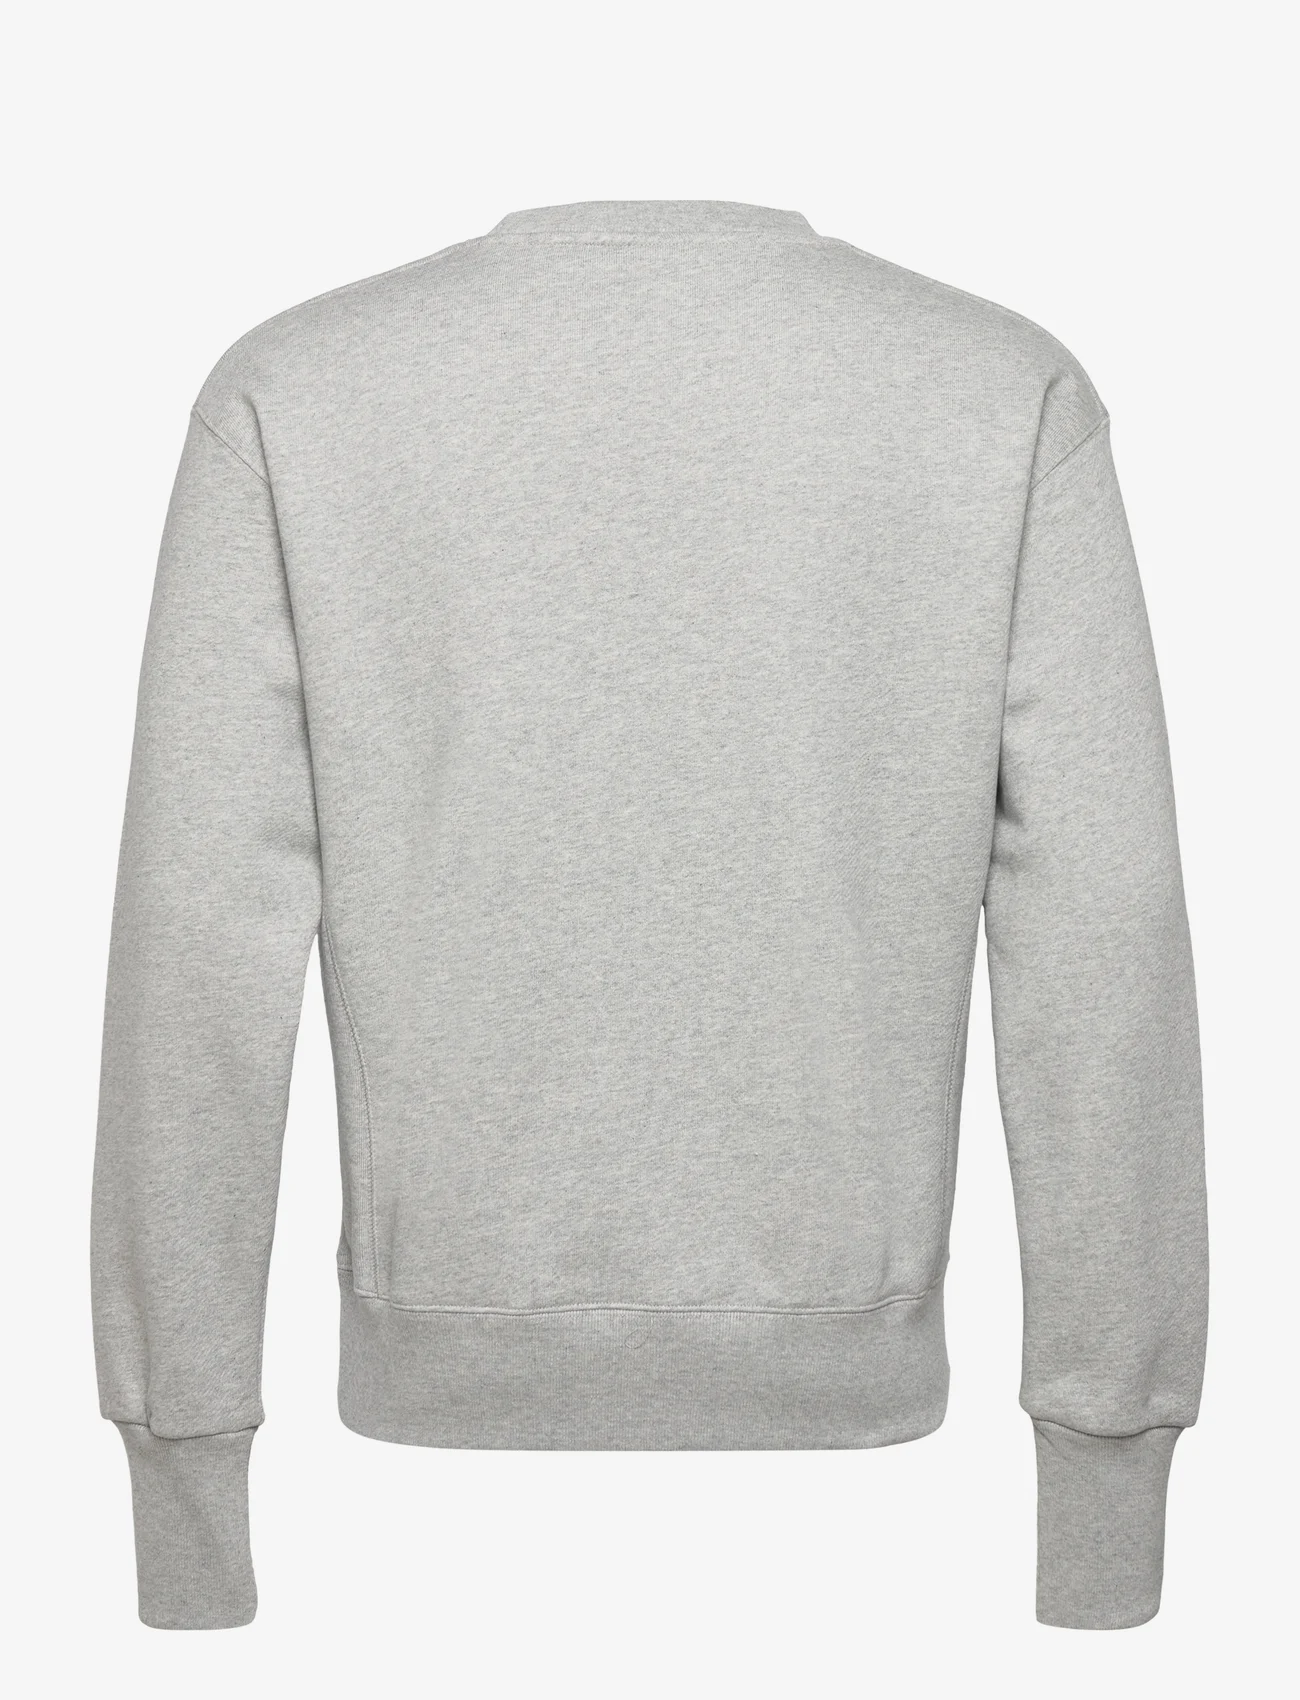 Soulland - Flower Logo sweatshirt - kapuzenpullover - grey melange - 1